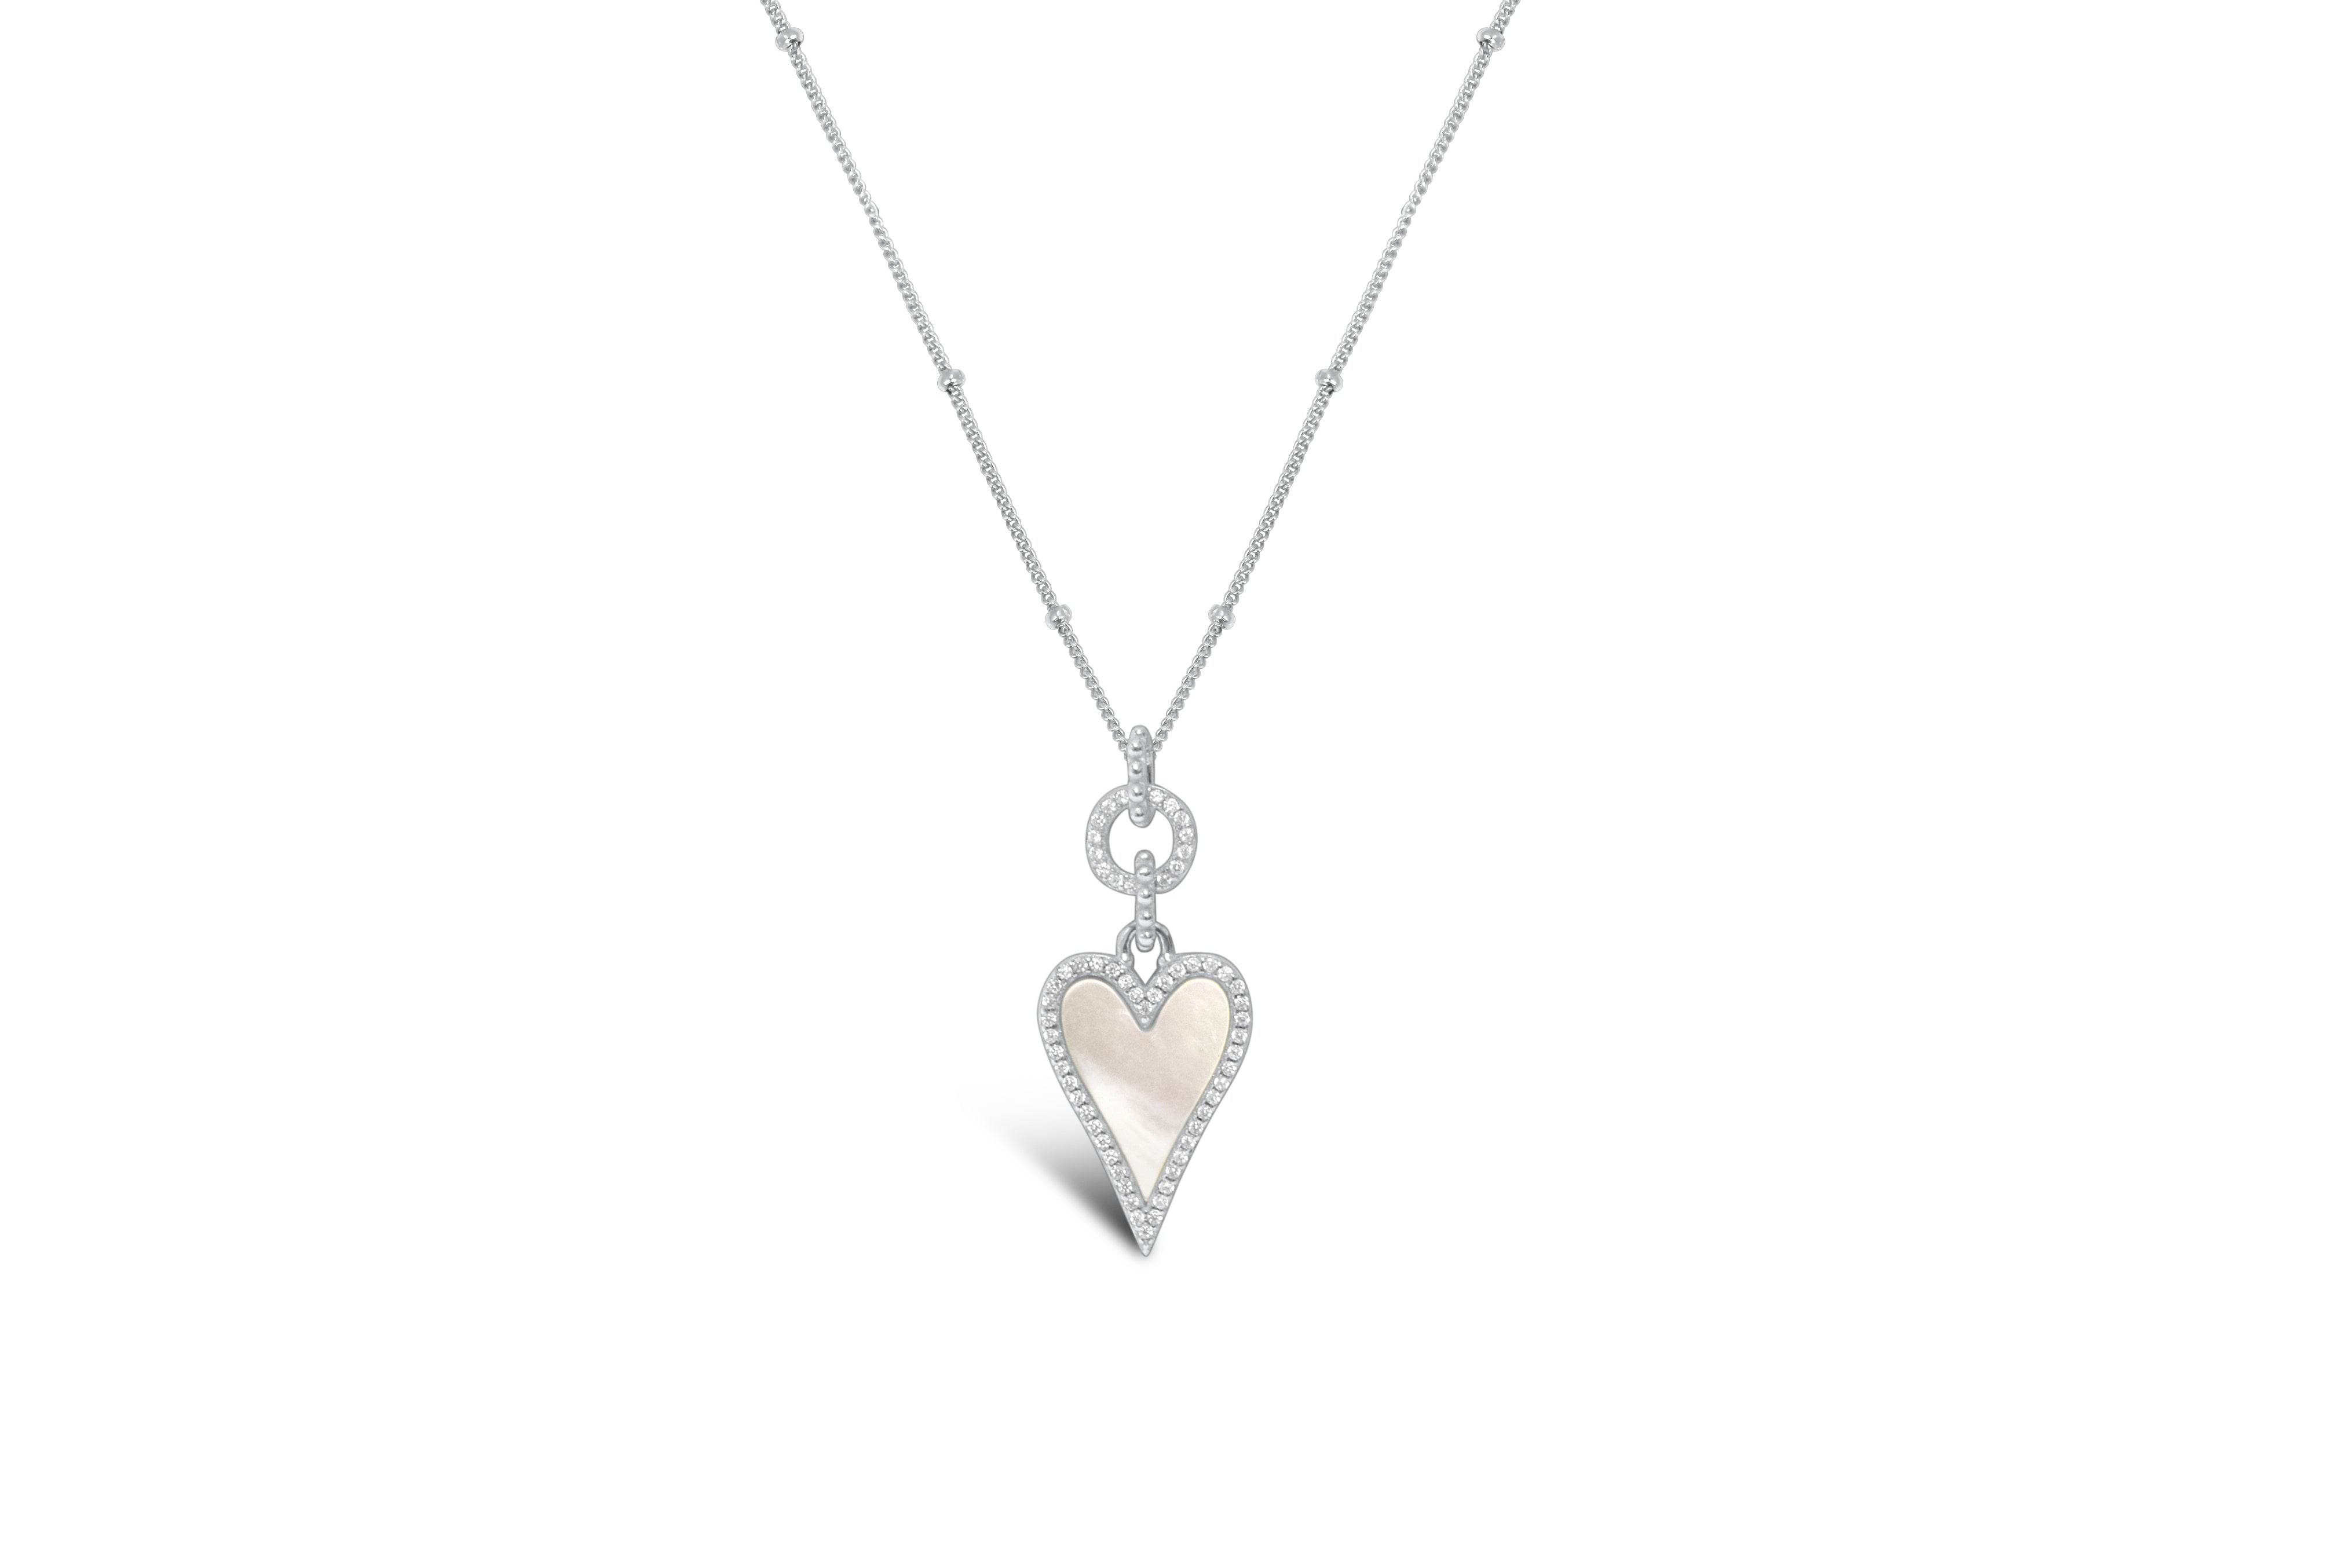 Stia "Classy Girls Wear Pearls" Beautiful Dripping Heart Necklace